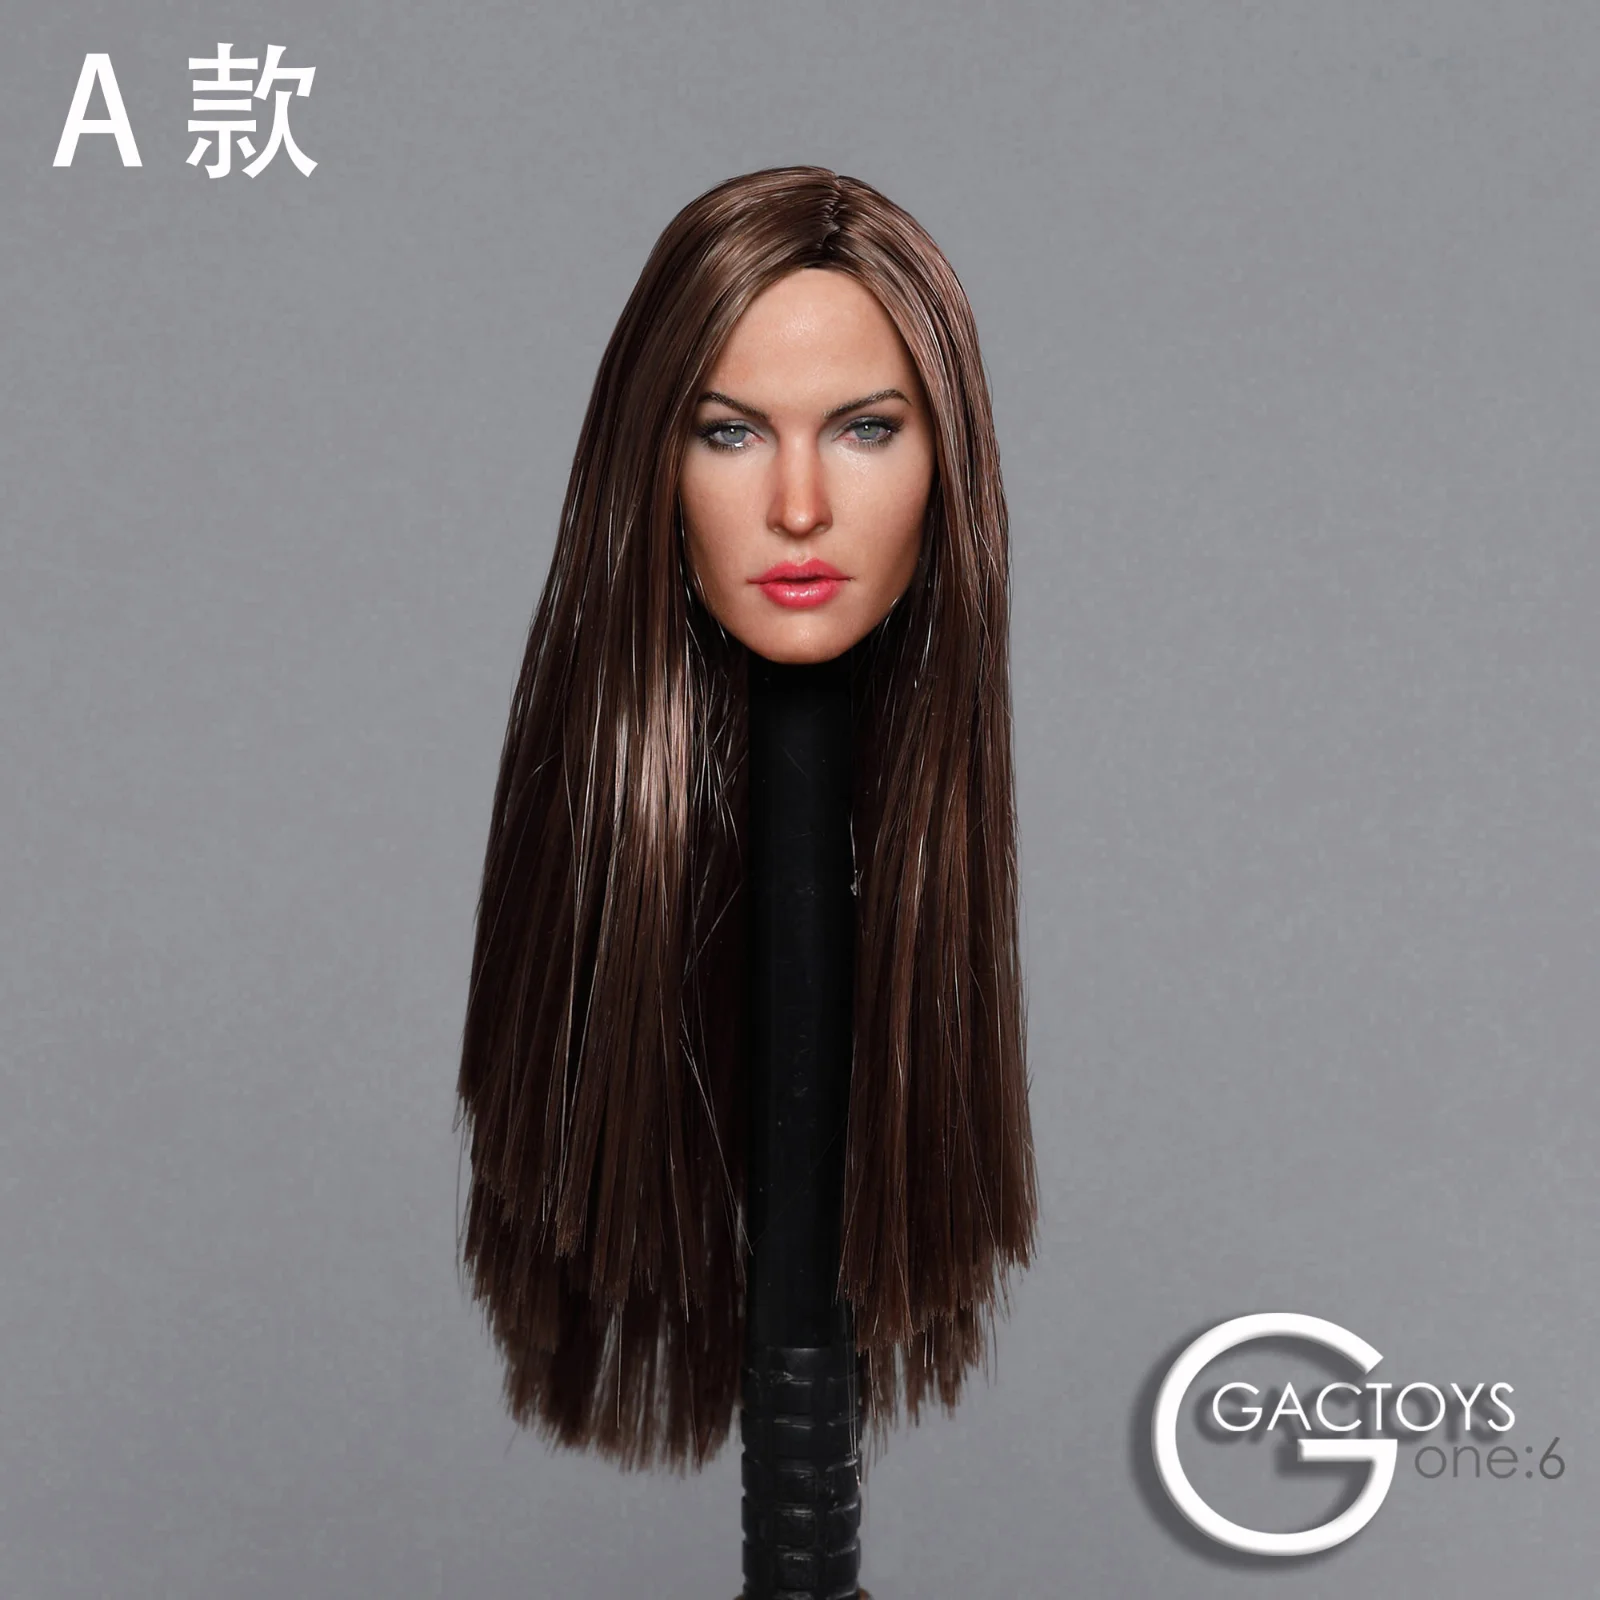 Cat Toys CT008B 1//6 Asian Female Head Sculpt Model Toy Fit 12/'/' Action Figure